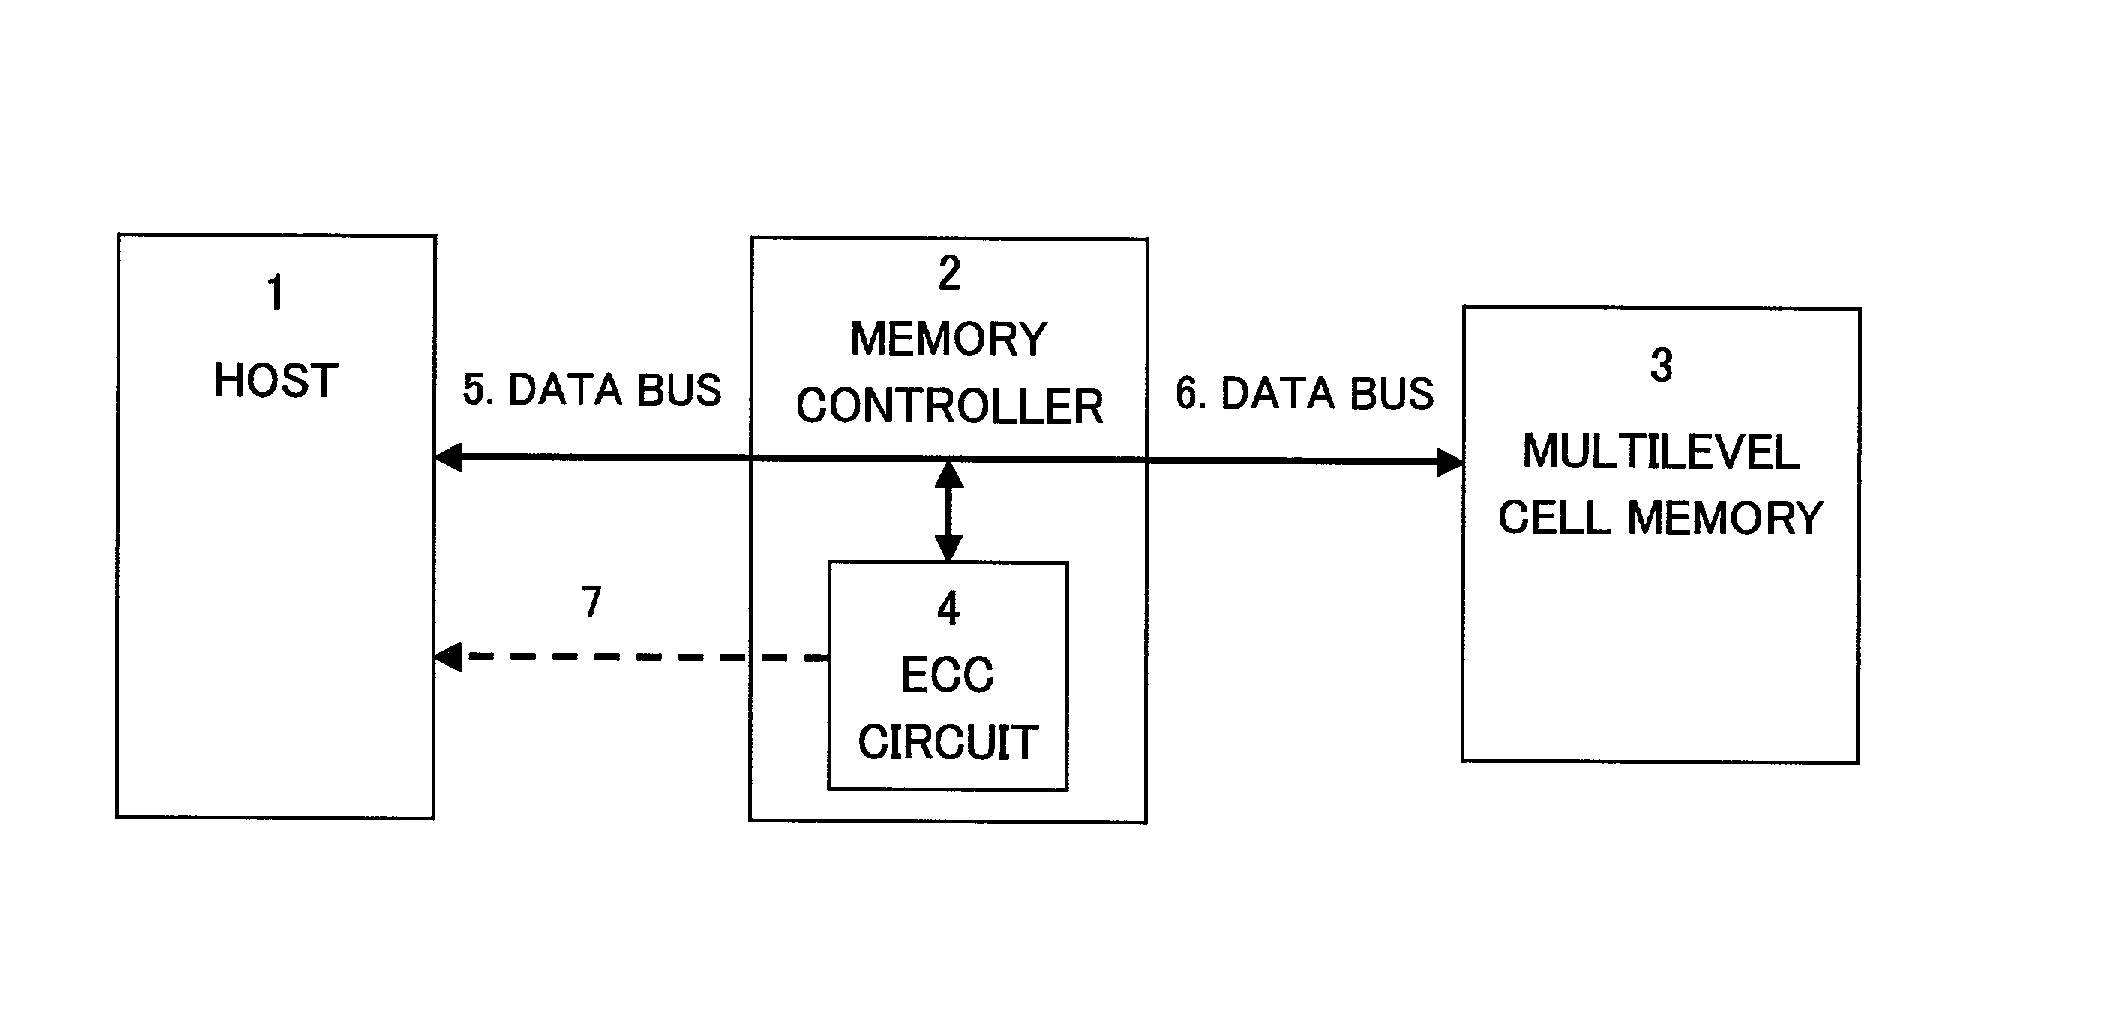 Memory controller for multilevel cell memory